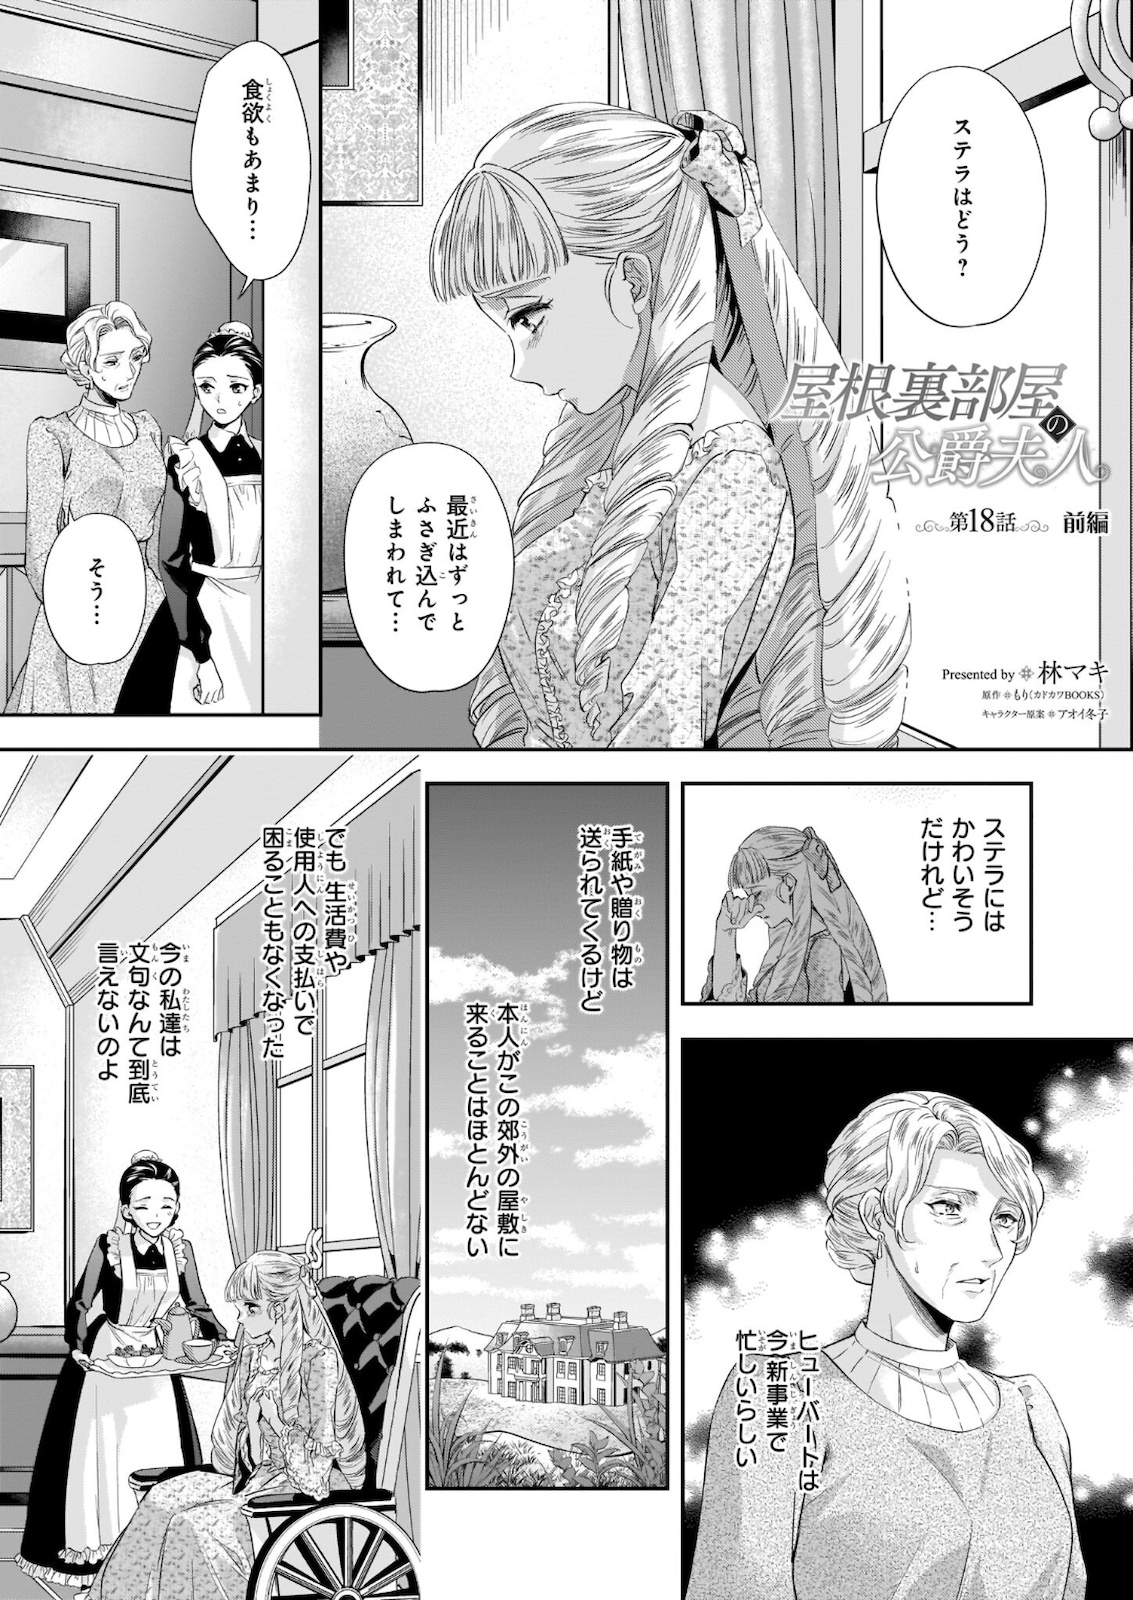 Yane Urabeya no Koushaku Fujin - Chapter 18.1 - Page 1